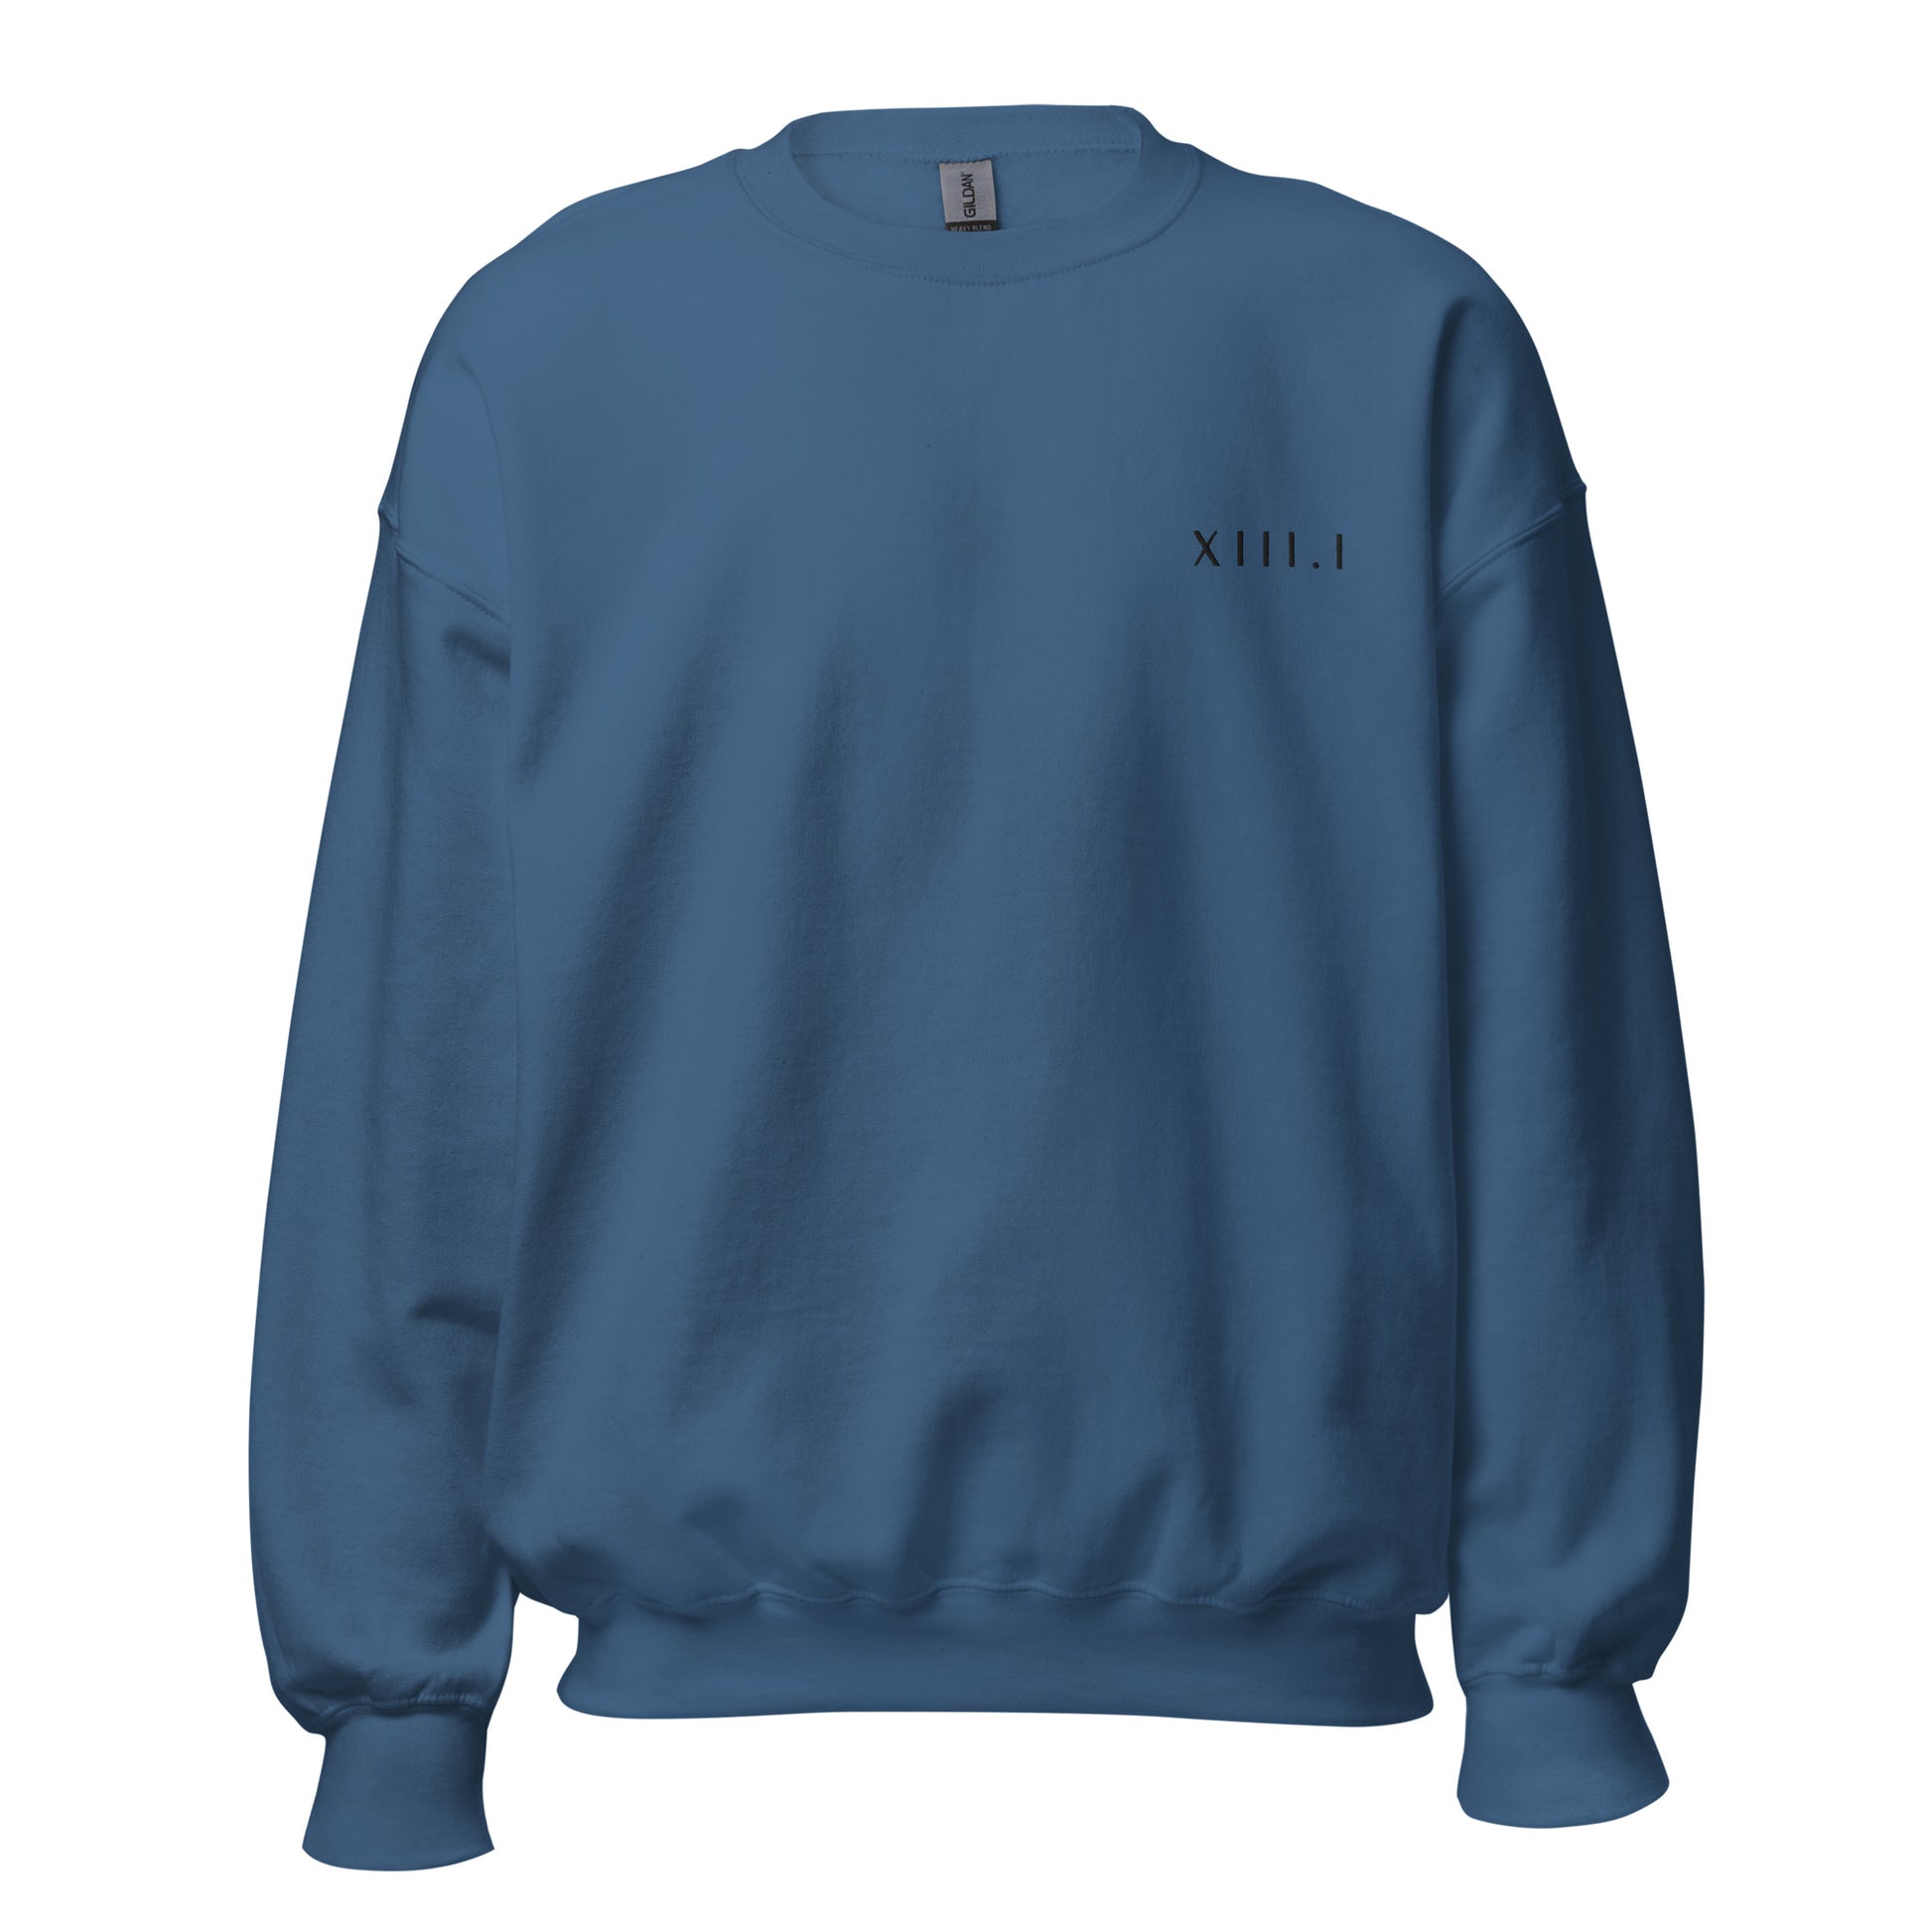 blue unisex sweatshirt with XIII.I 13.1 half marathon in roman numerals embroidered in black writing